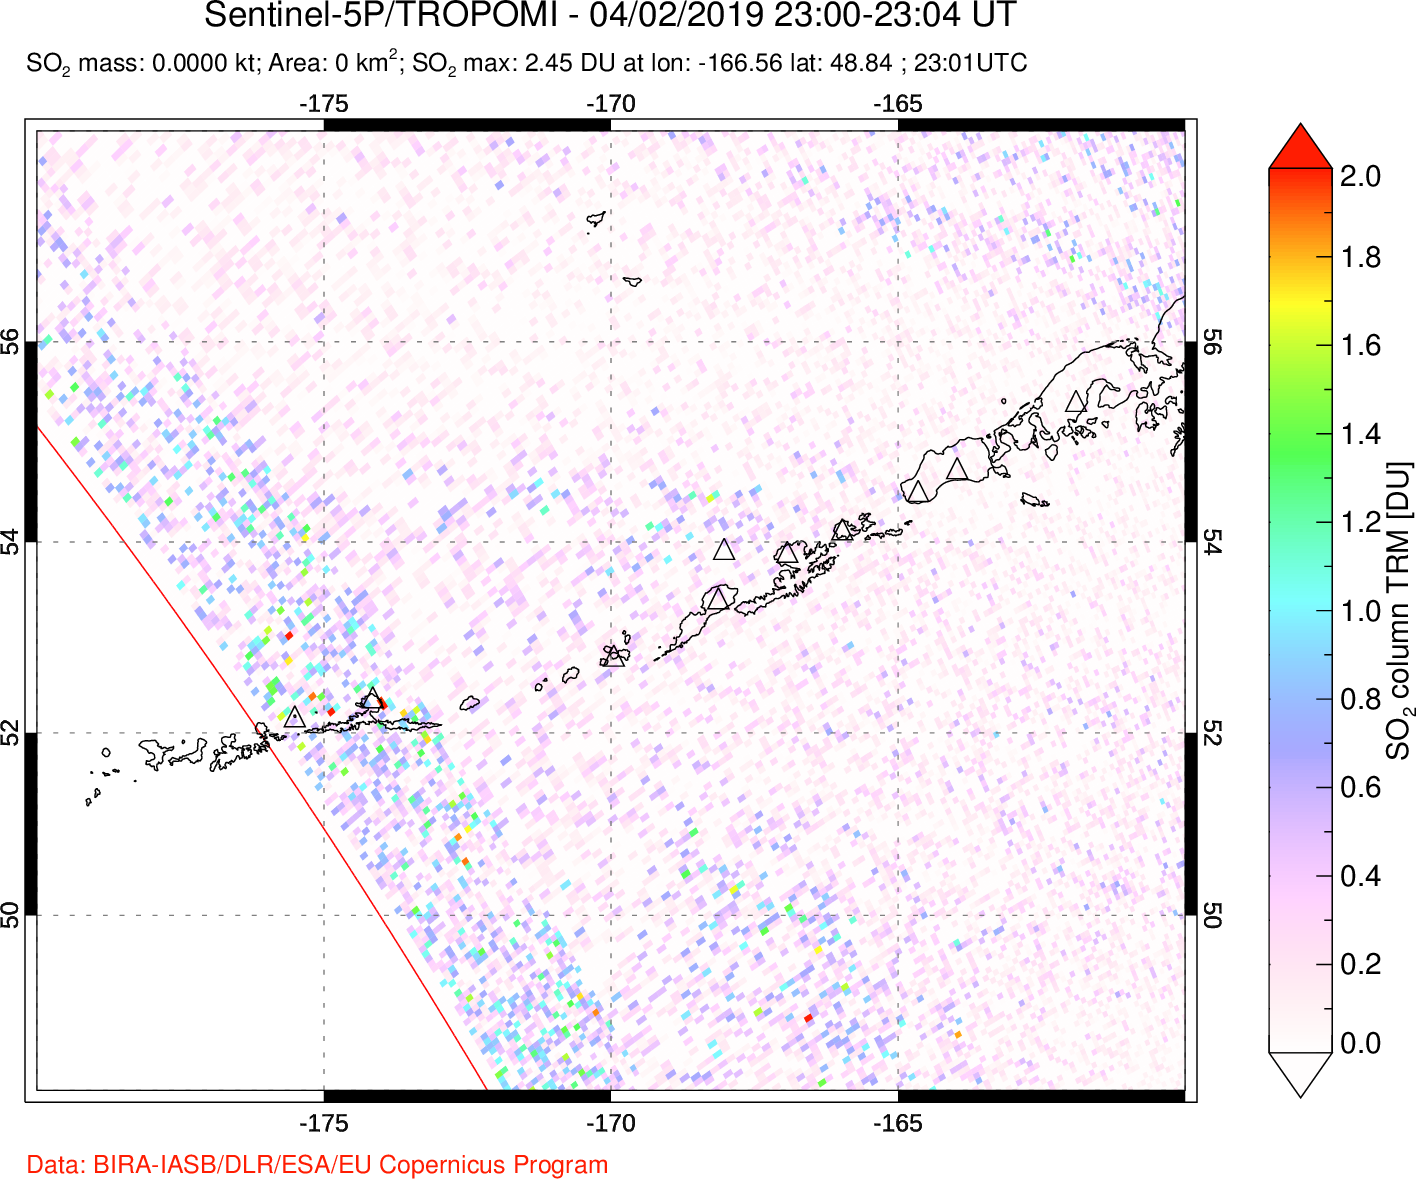 A sulfur dioxide image over Aleutian Islands, Alaska, USA on Apr 02, 2019.